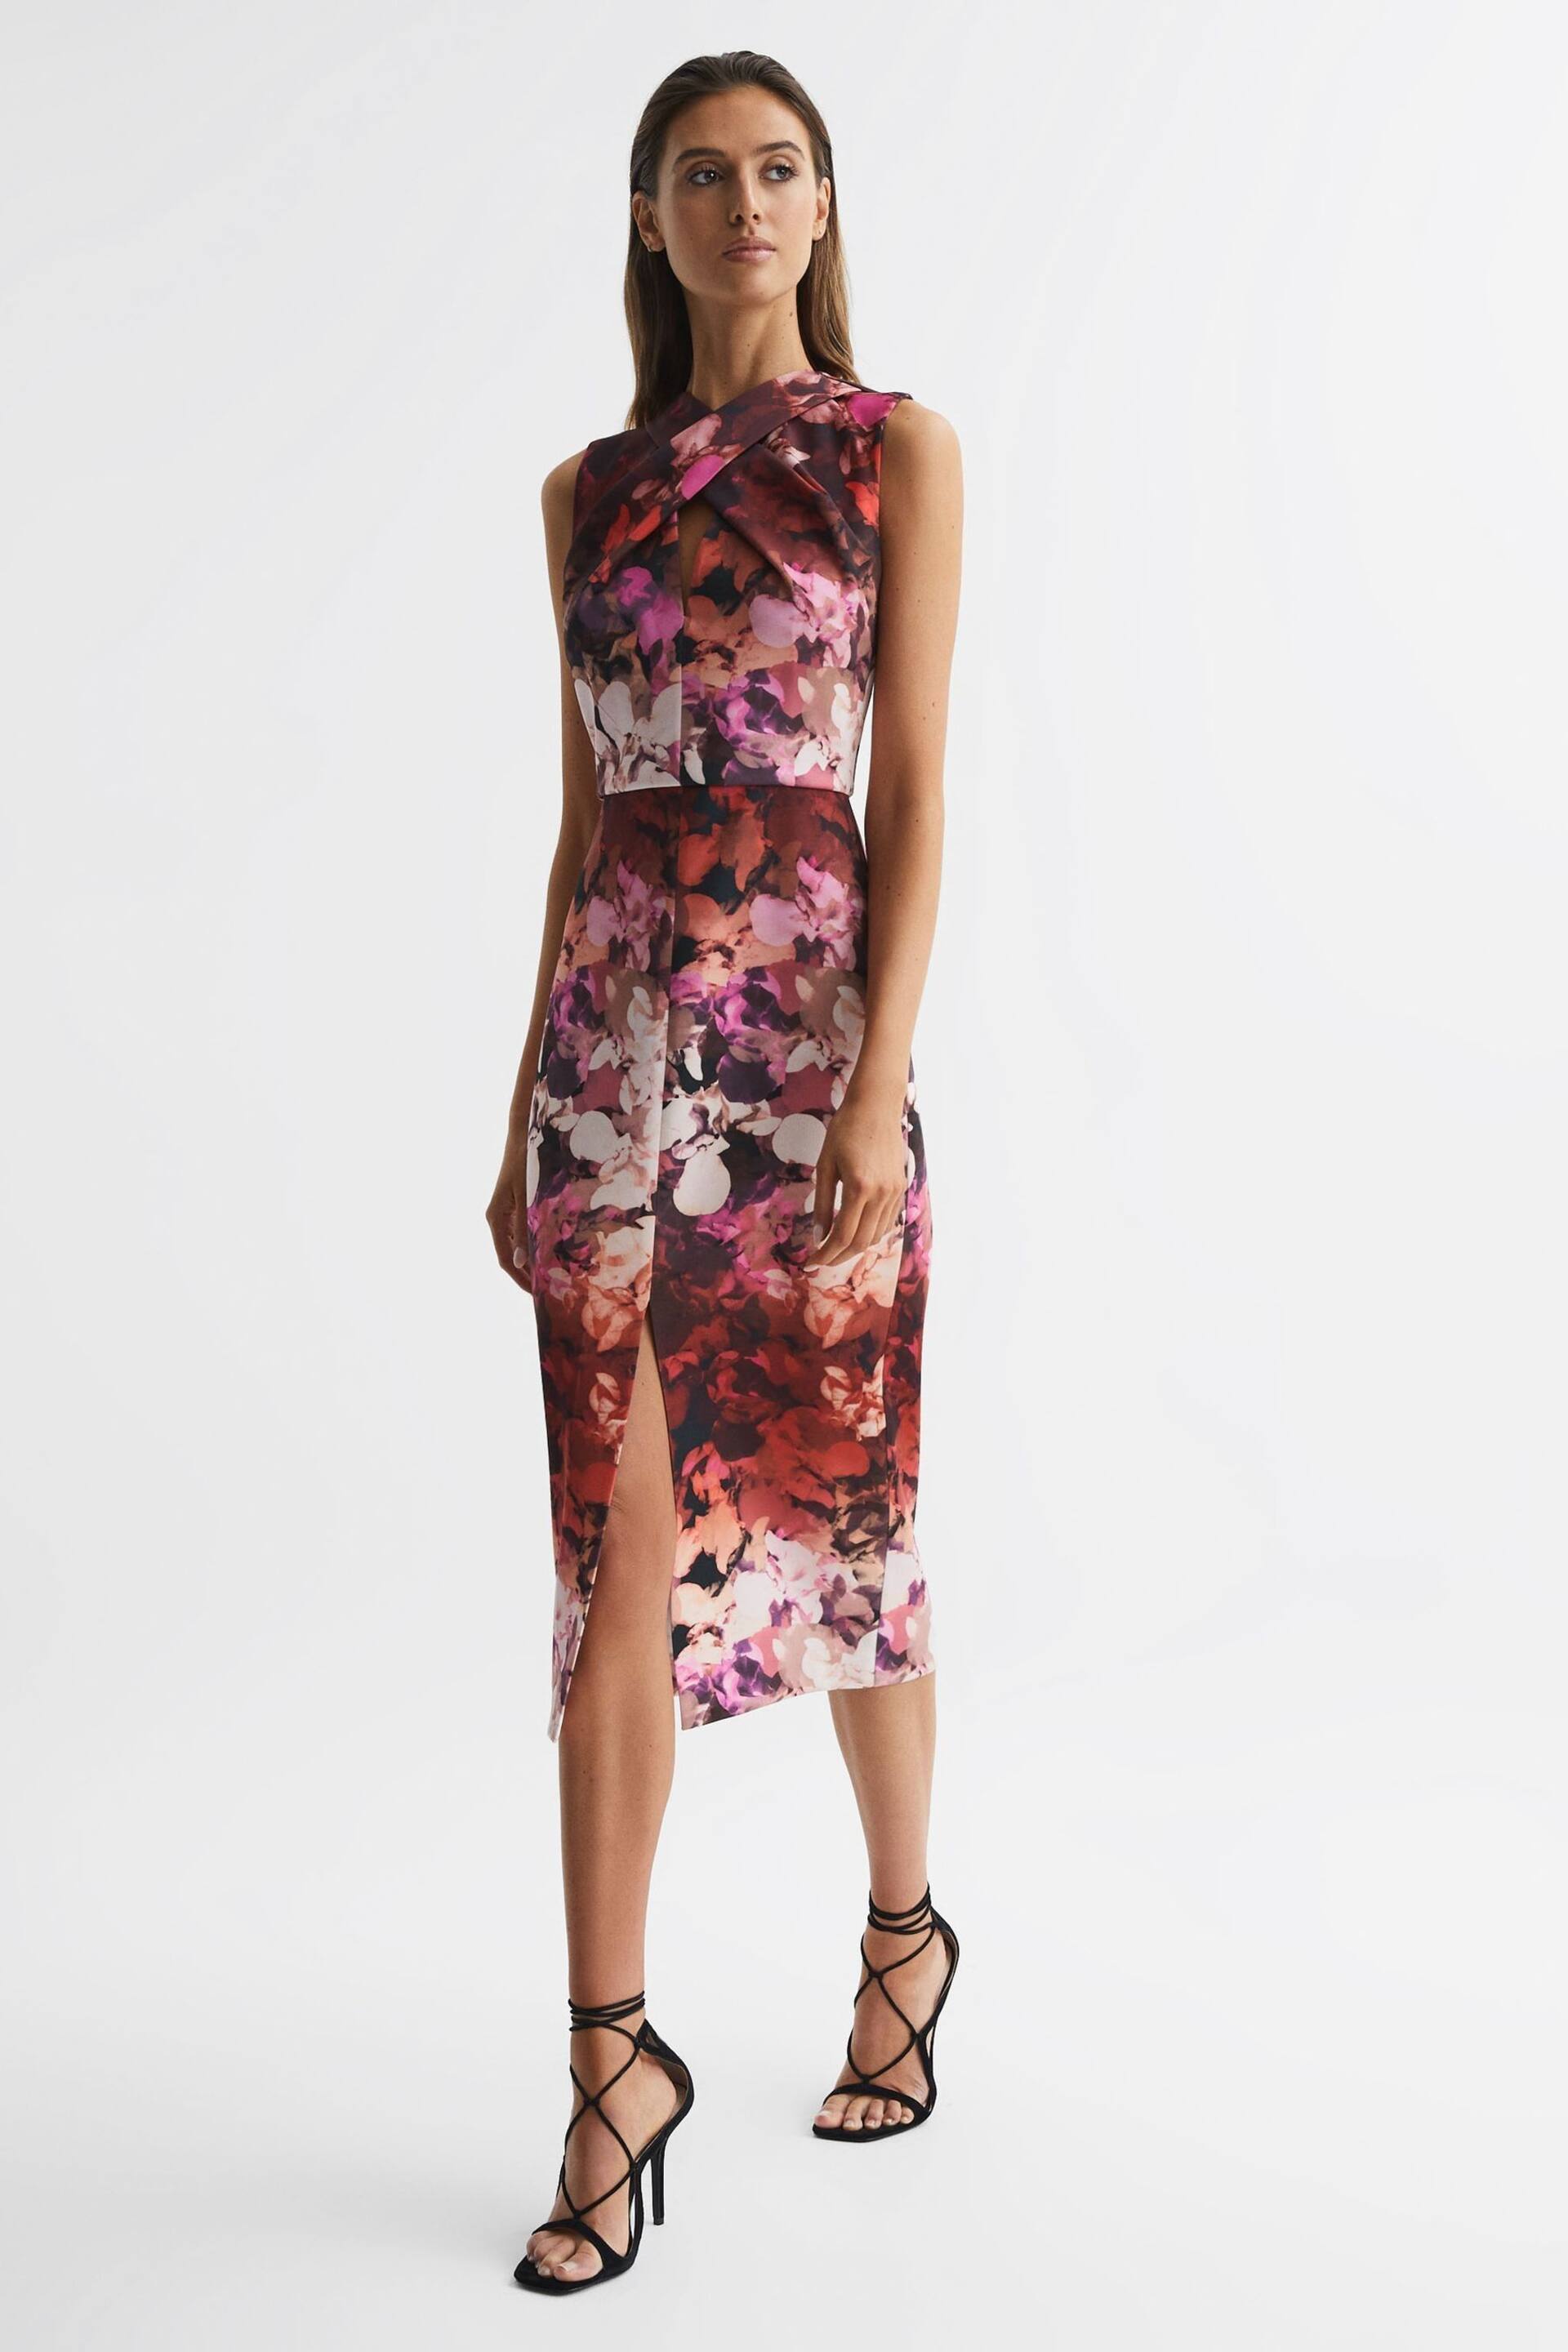 Reiss Berry Vega Floral Printed Bodycon Midi Dress - Image 1 of 6